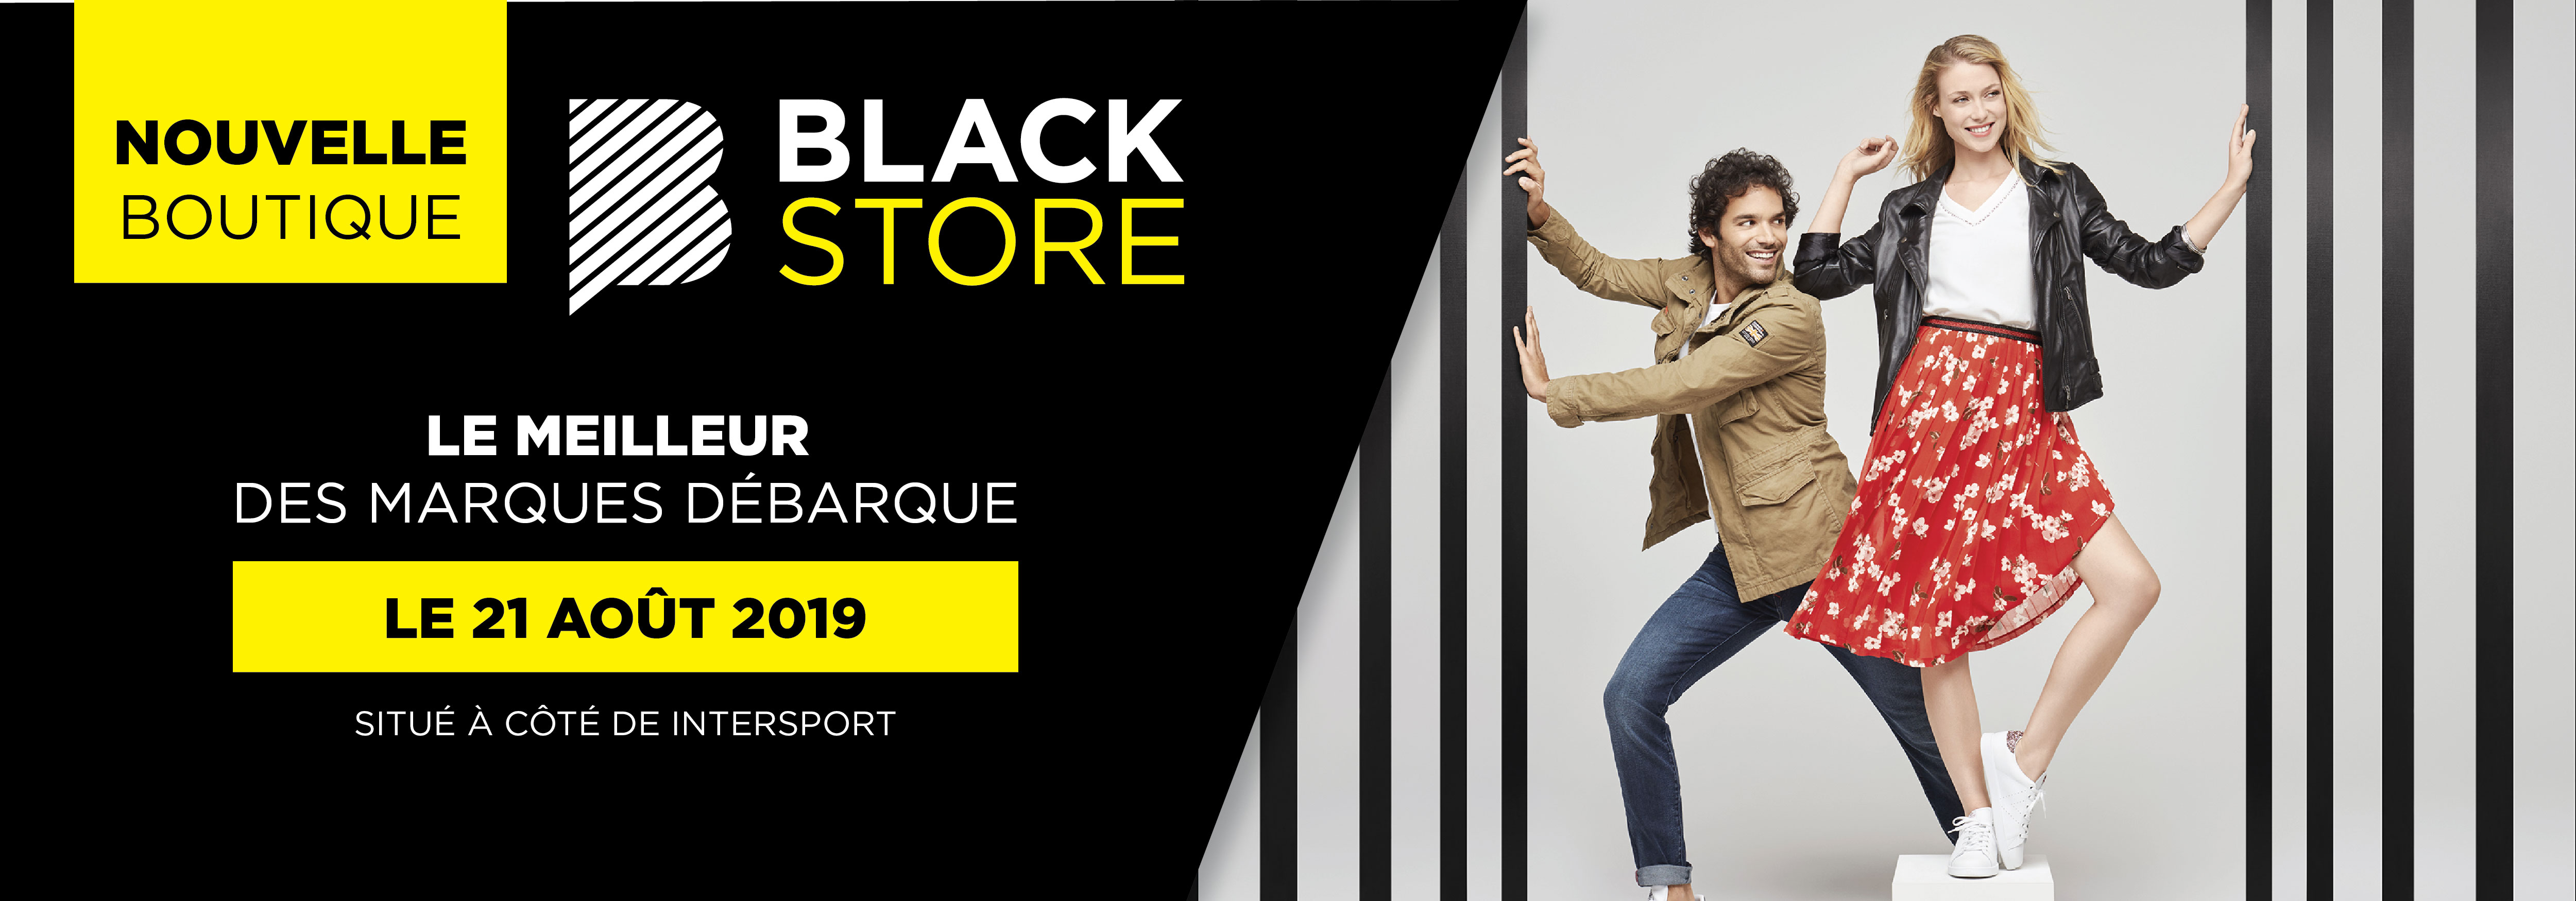 BlackStore_ouverture_www-home